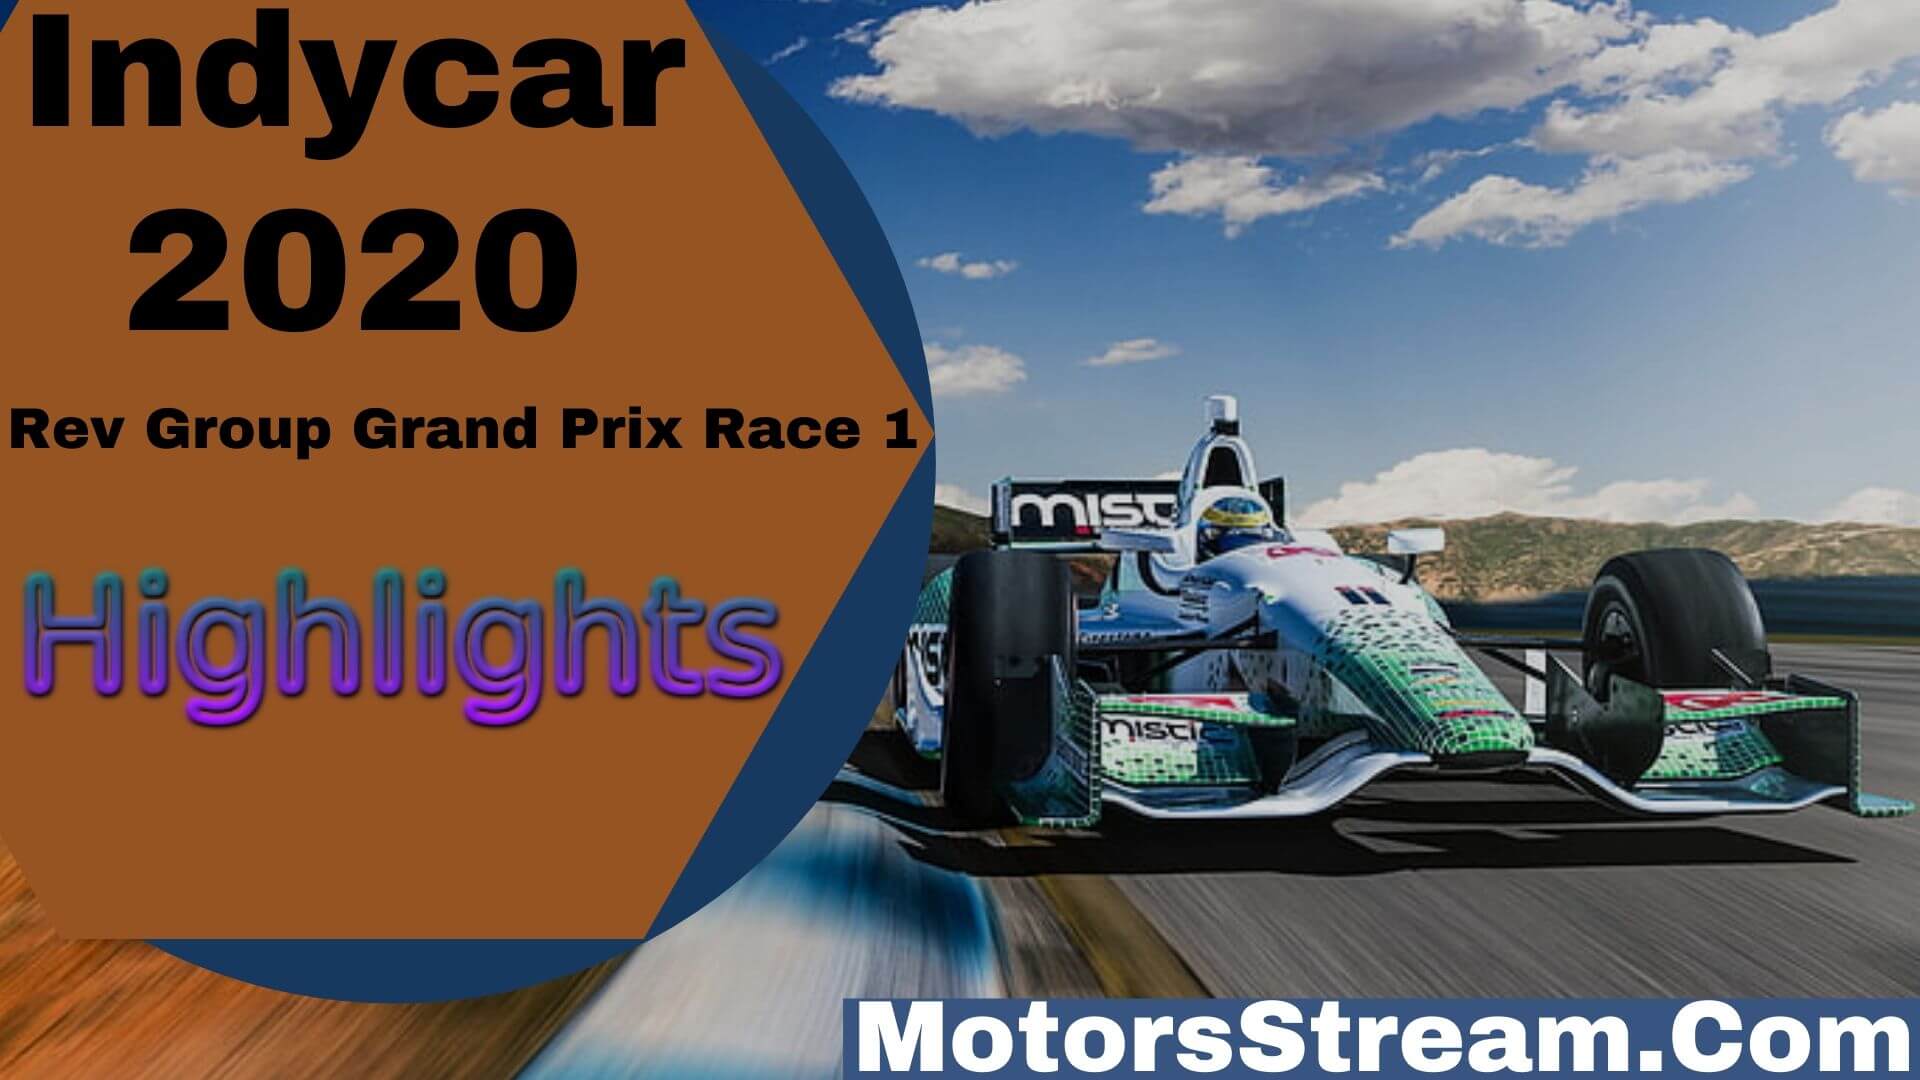 Rev Group Grand Prix Race 1 Highlights 2020 Indycar